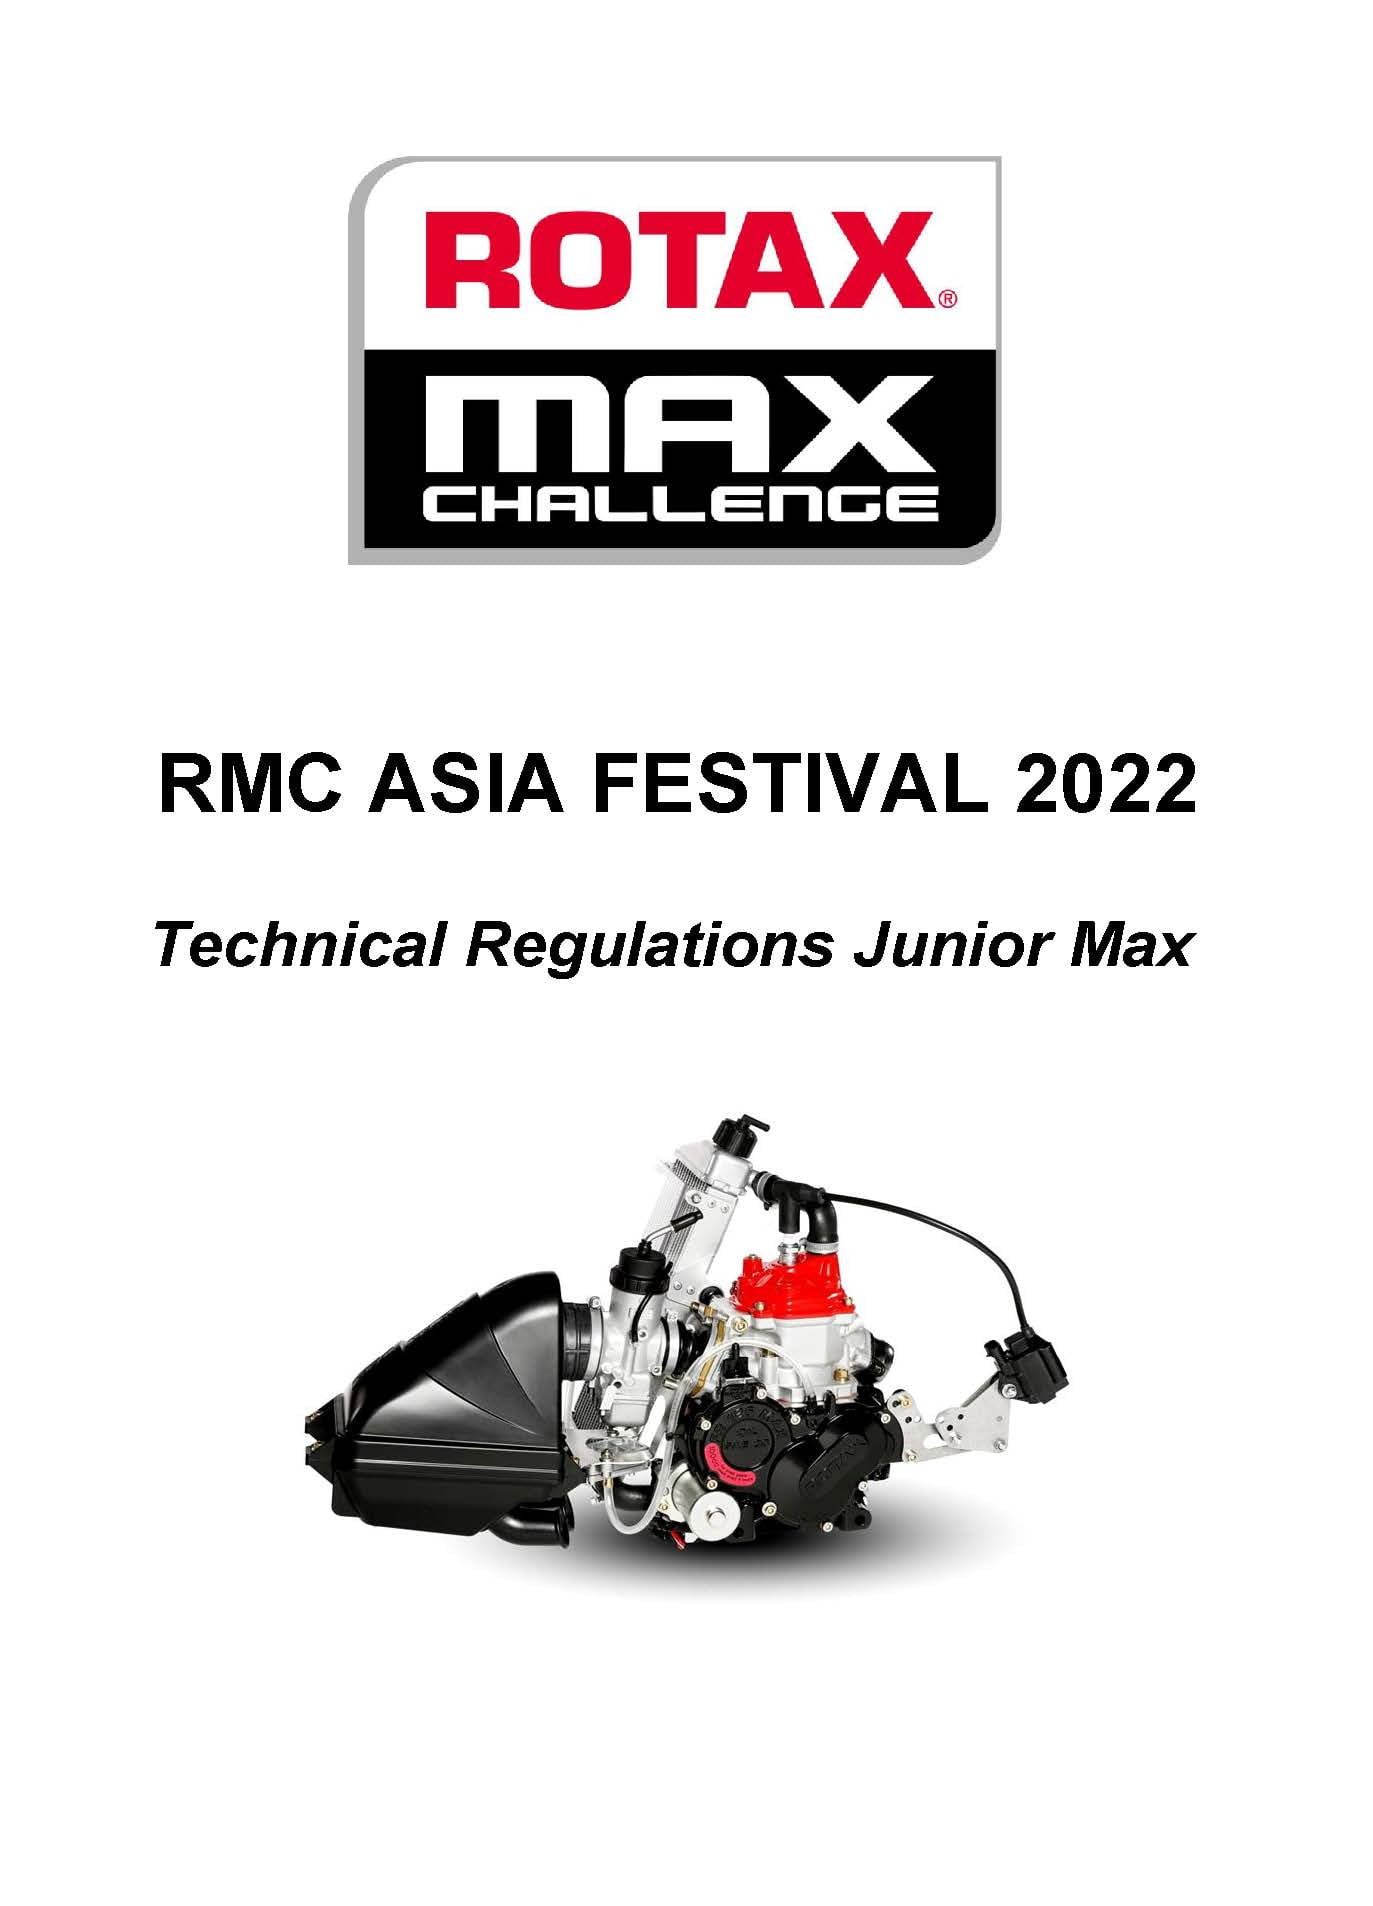 Rotax MAX Challenge Asia Festival 2022 Junior Technical Regulations